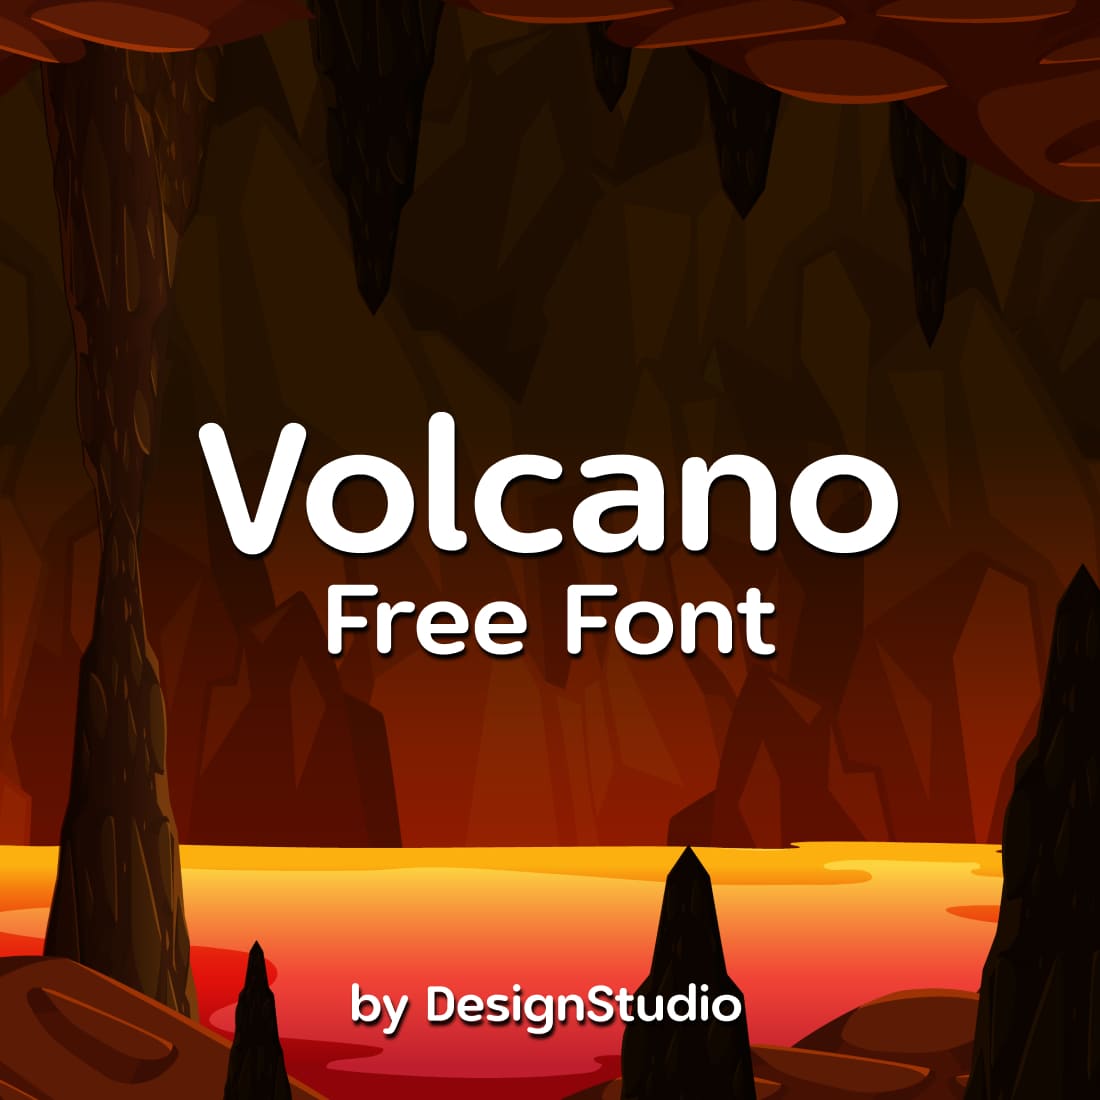 Volcano Monospaced Sans Serif Font.